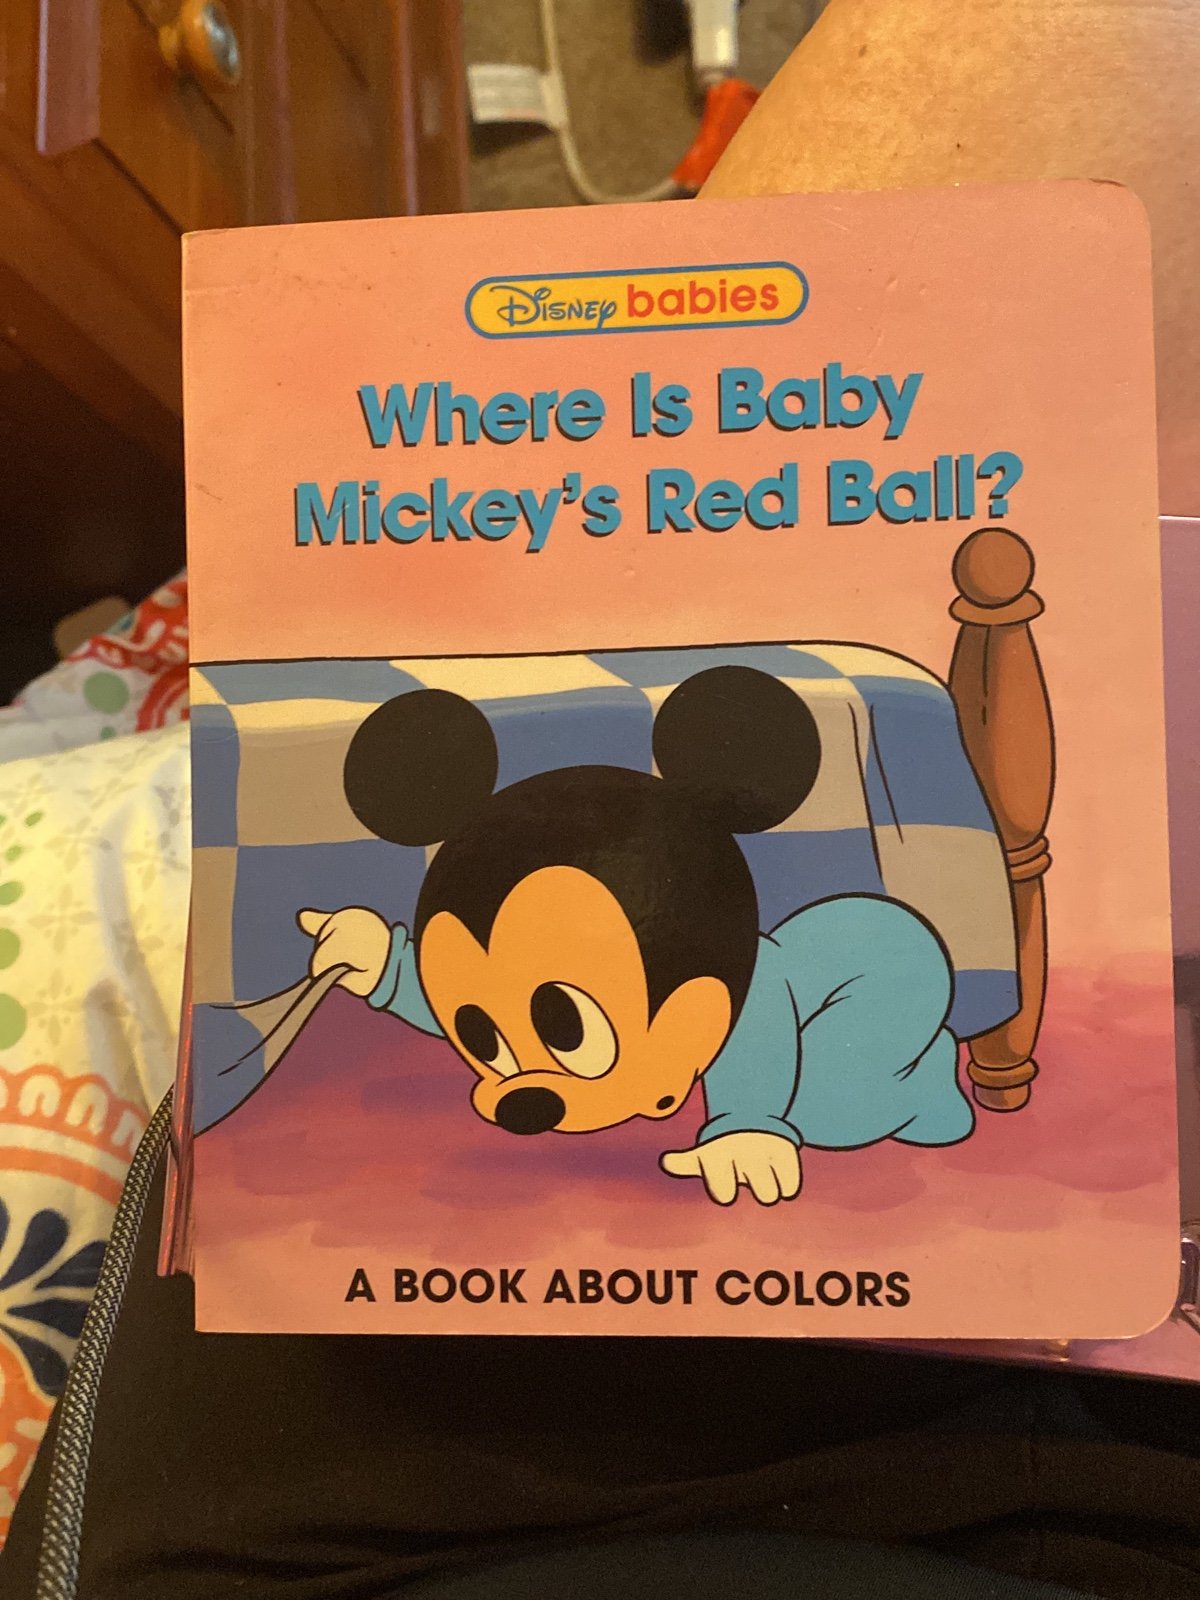 Disney babies book HdfNIrrE6